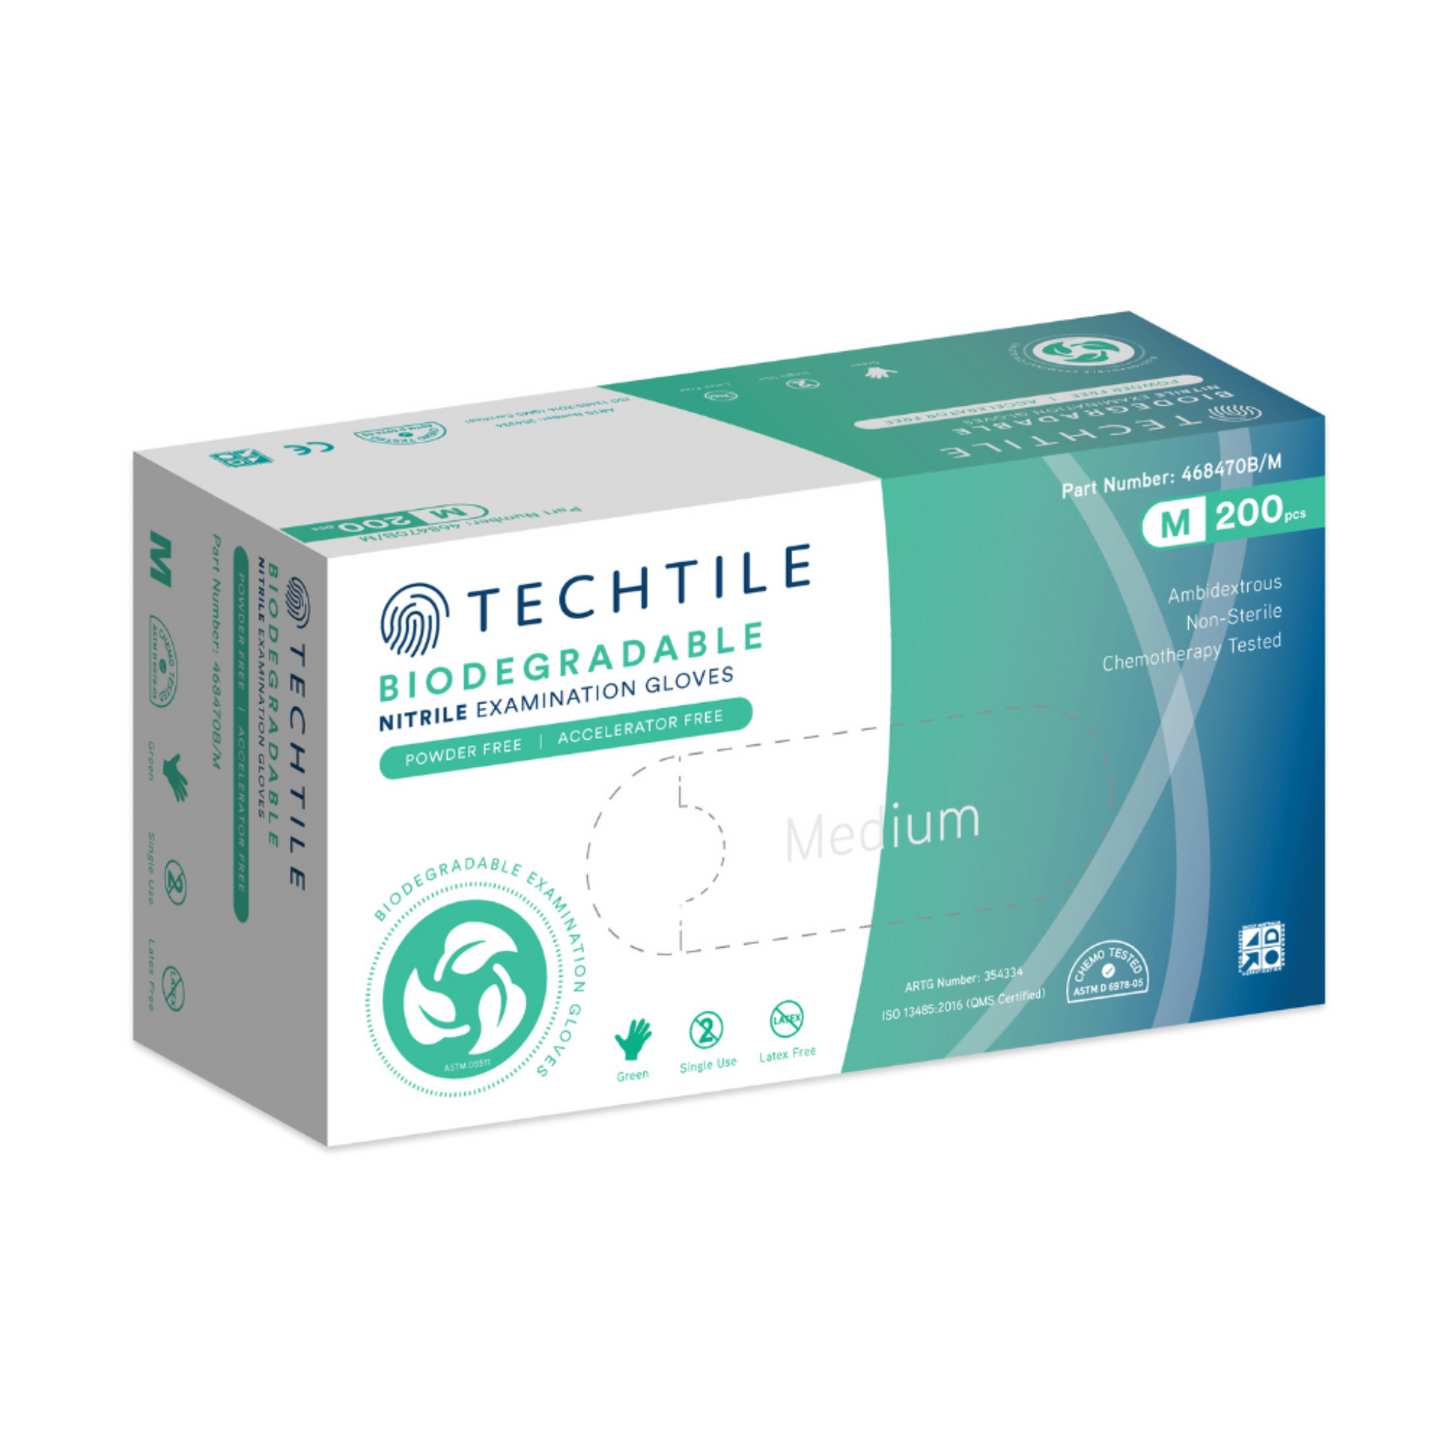 Techtile Biodegradable Nitrile Gloves - M - Box (200pc)